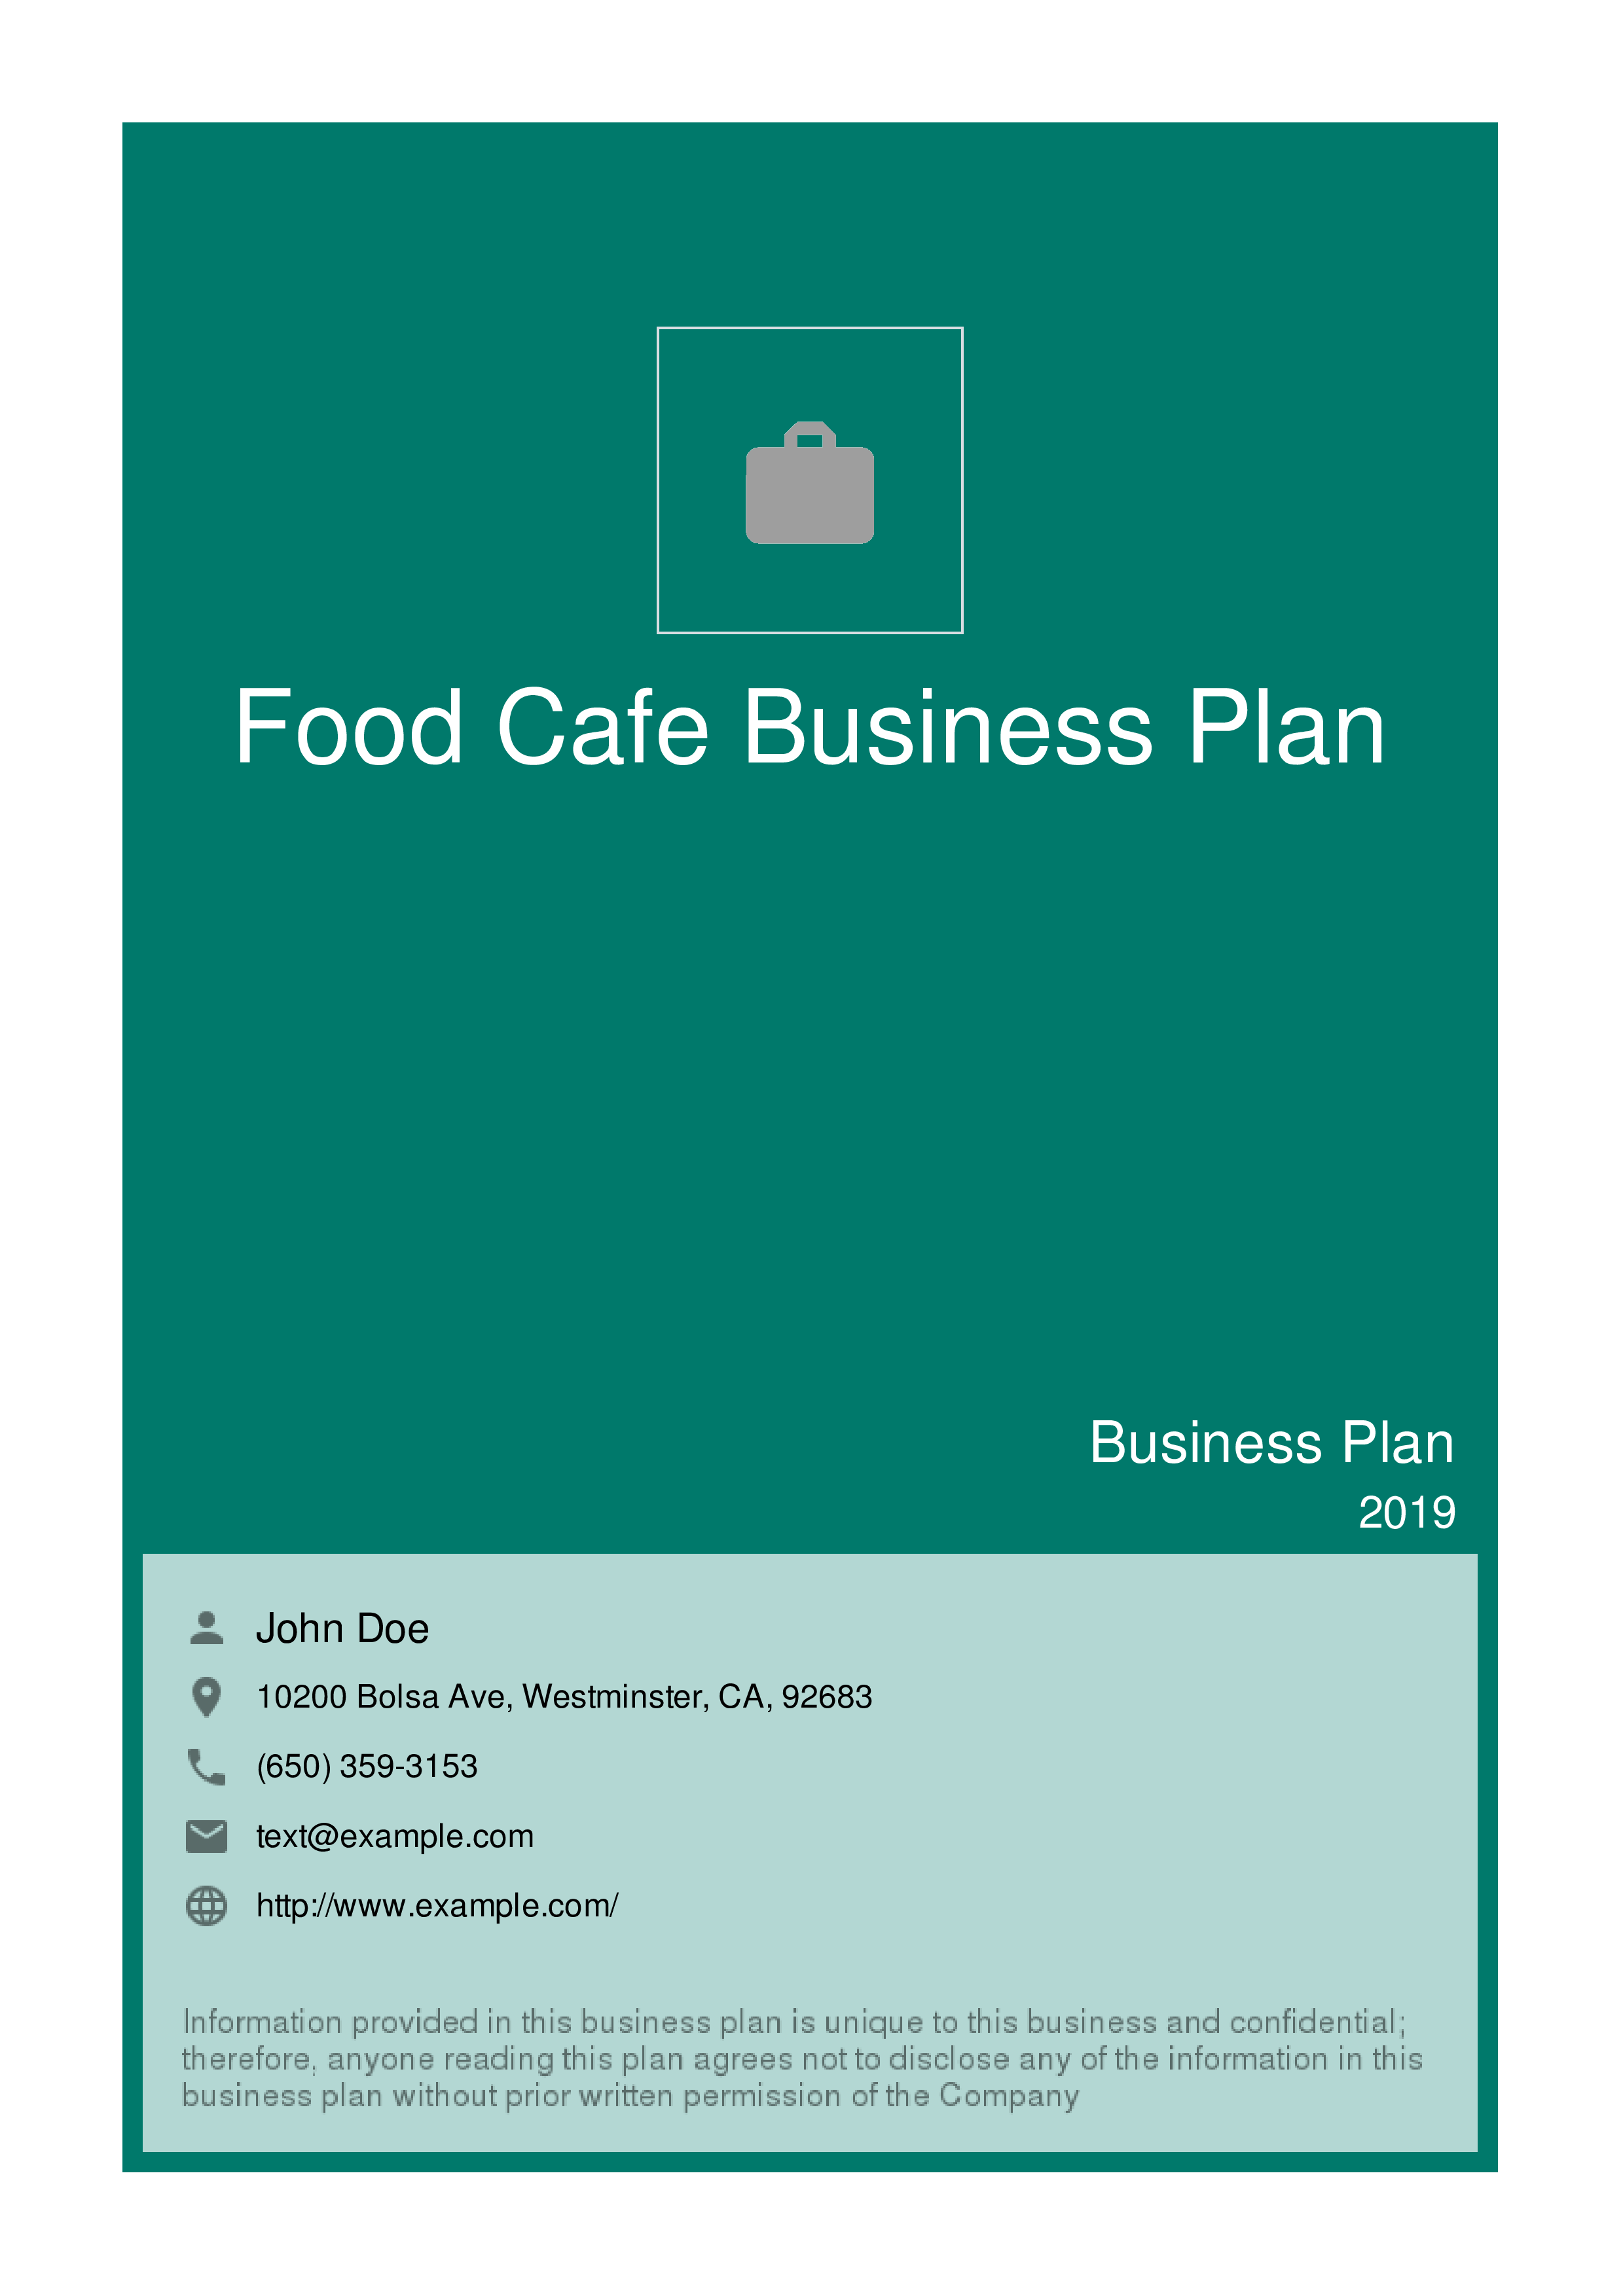 Food Cafe Business Plan Example - Eloquens